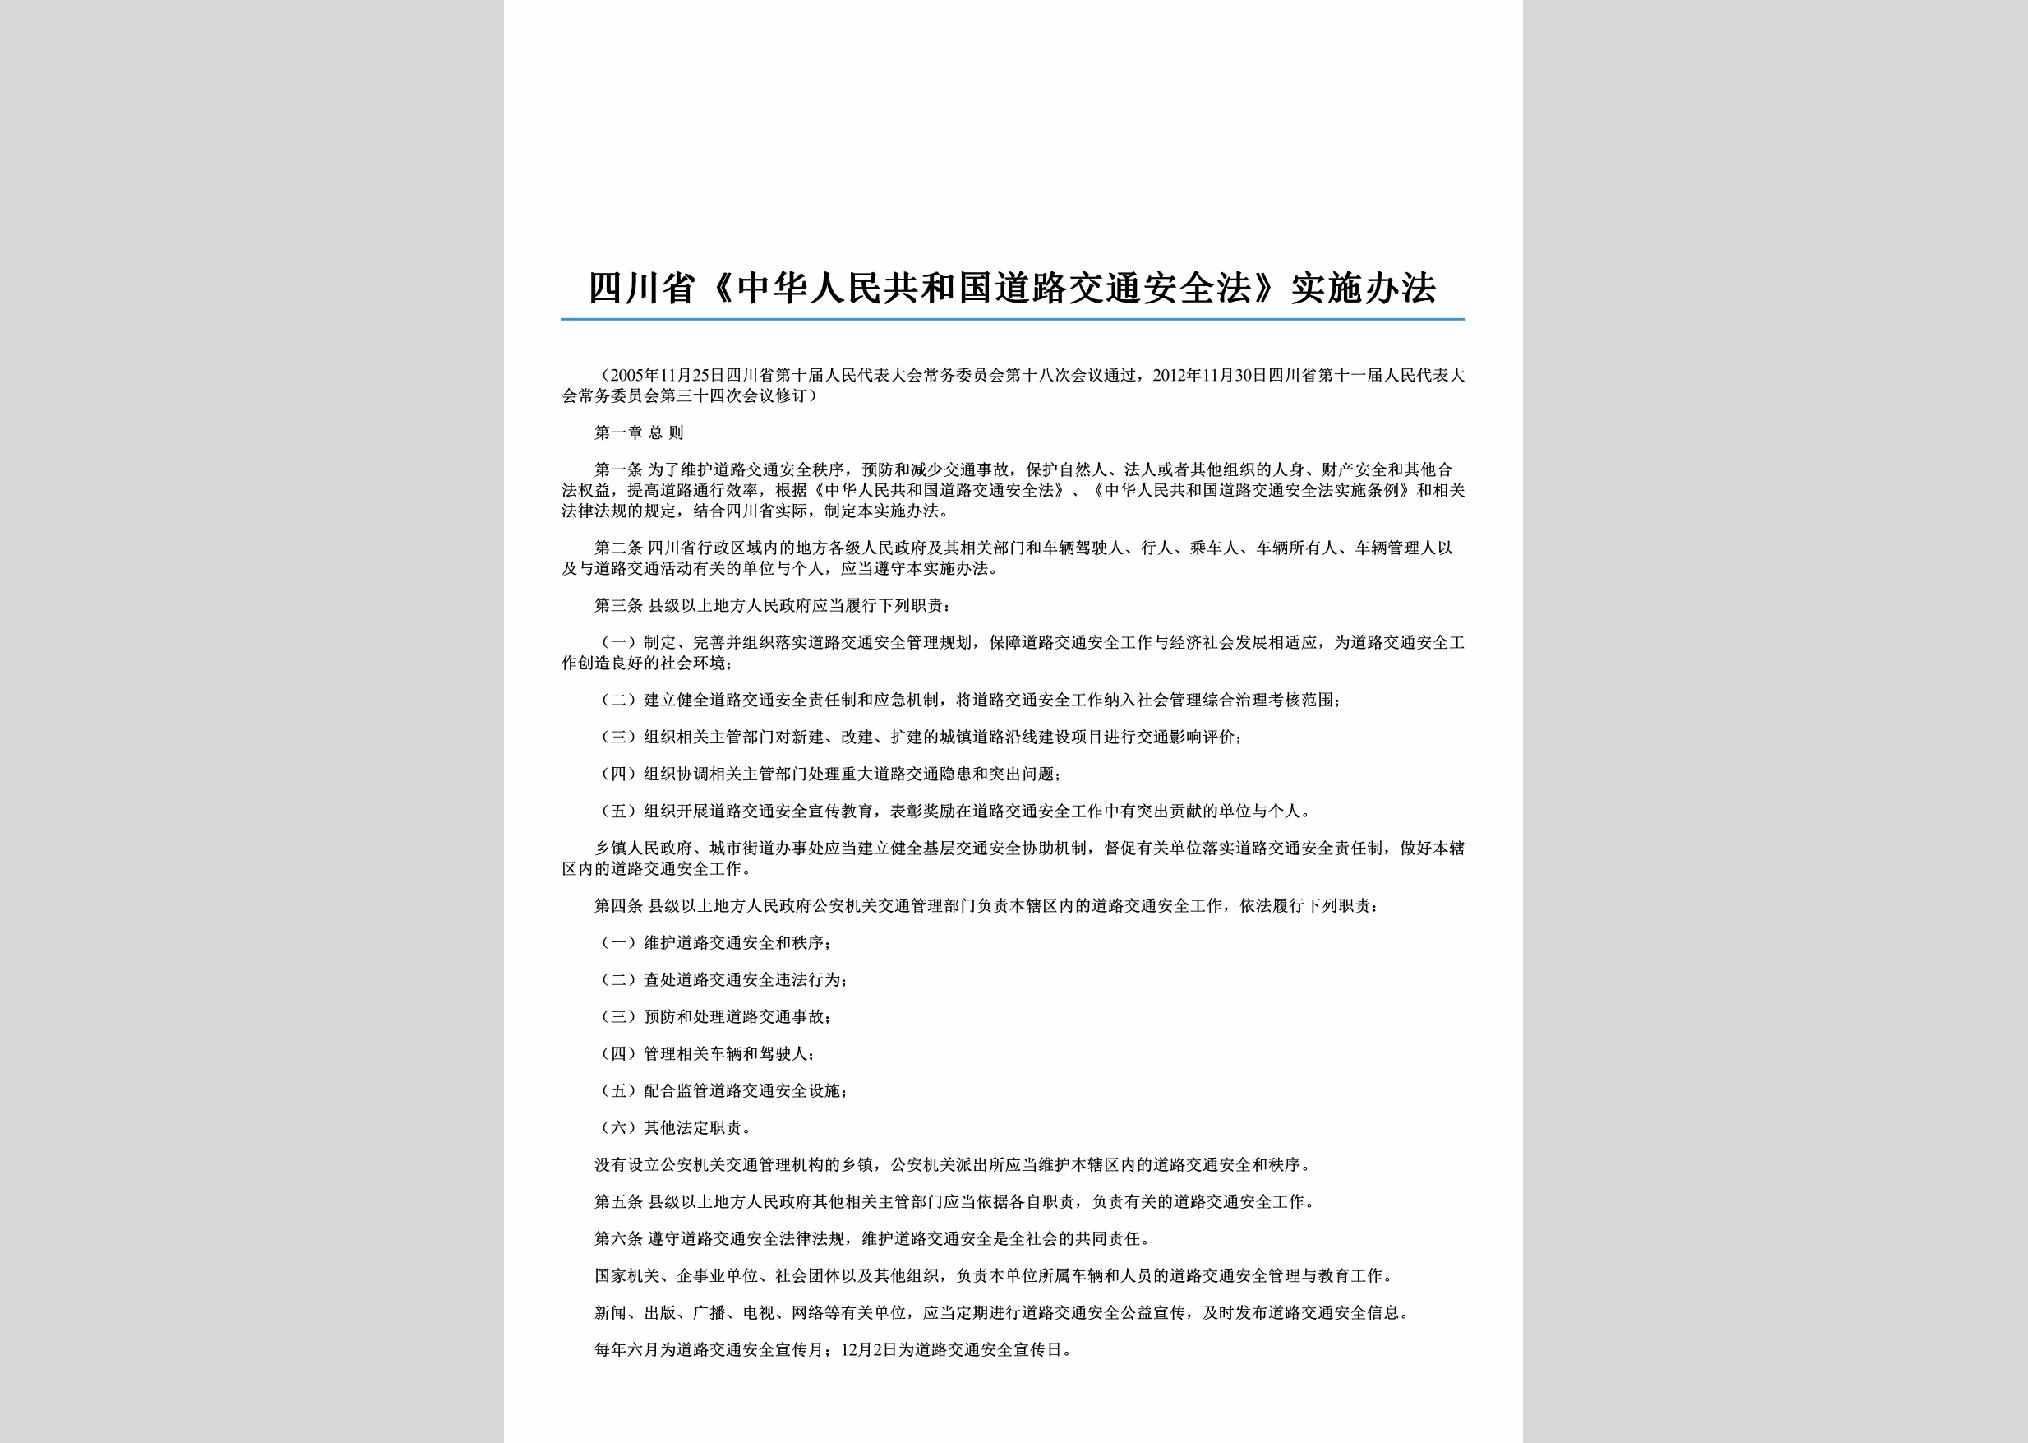 SC-JTAQSSBF-2013：四川省《中华人民共和国道路交通安全法》实施办法